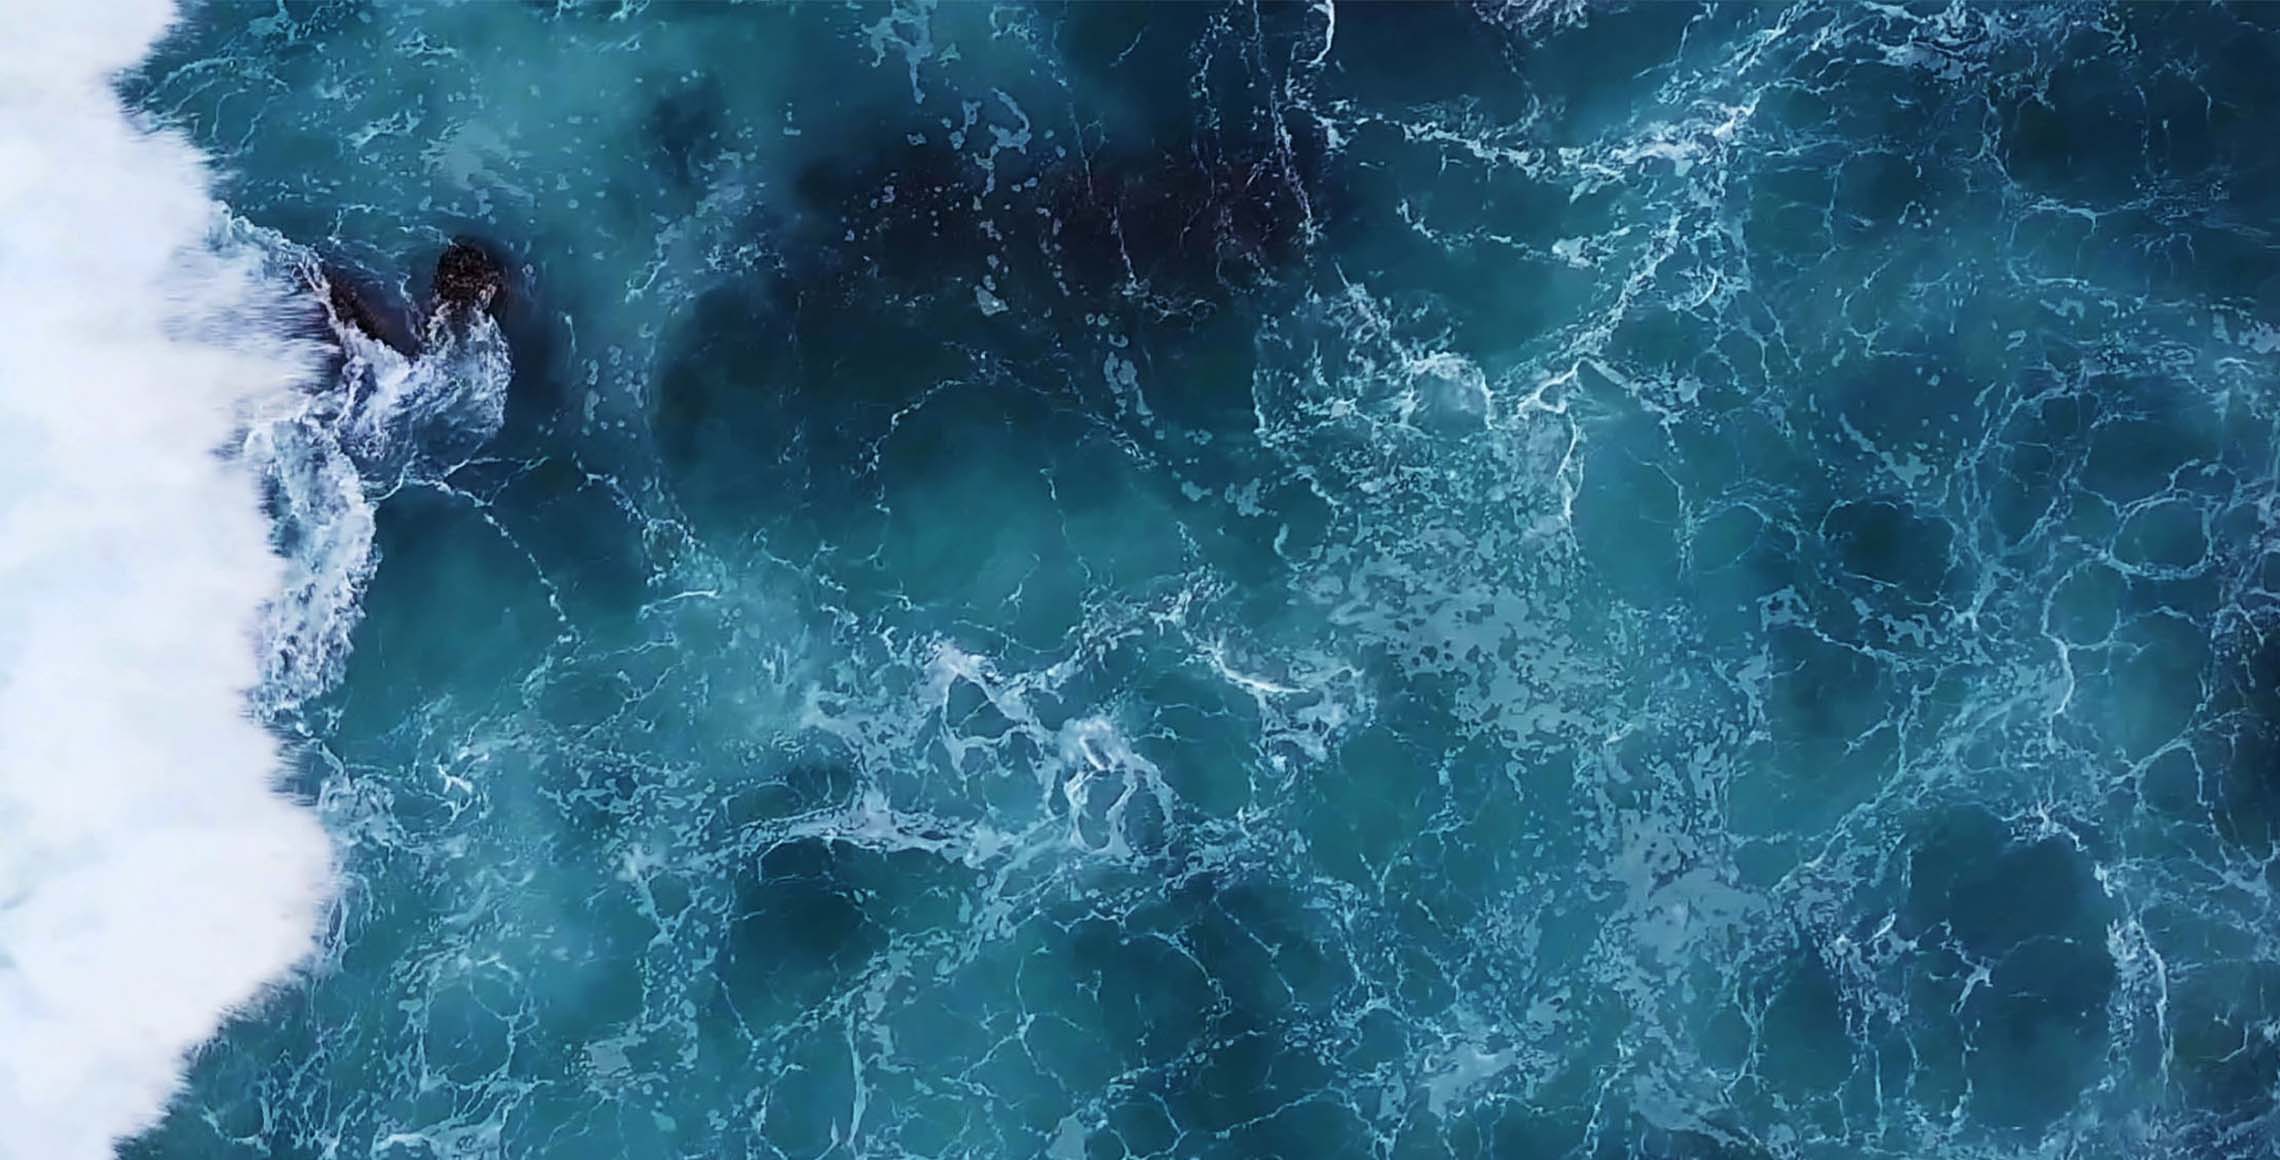 Aerial view of ocean waves crashing, creating white foam on blue water.